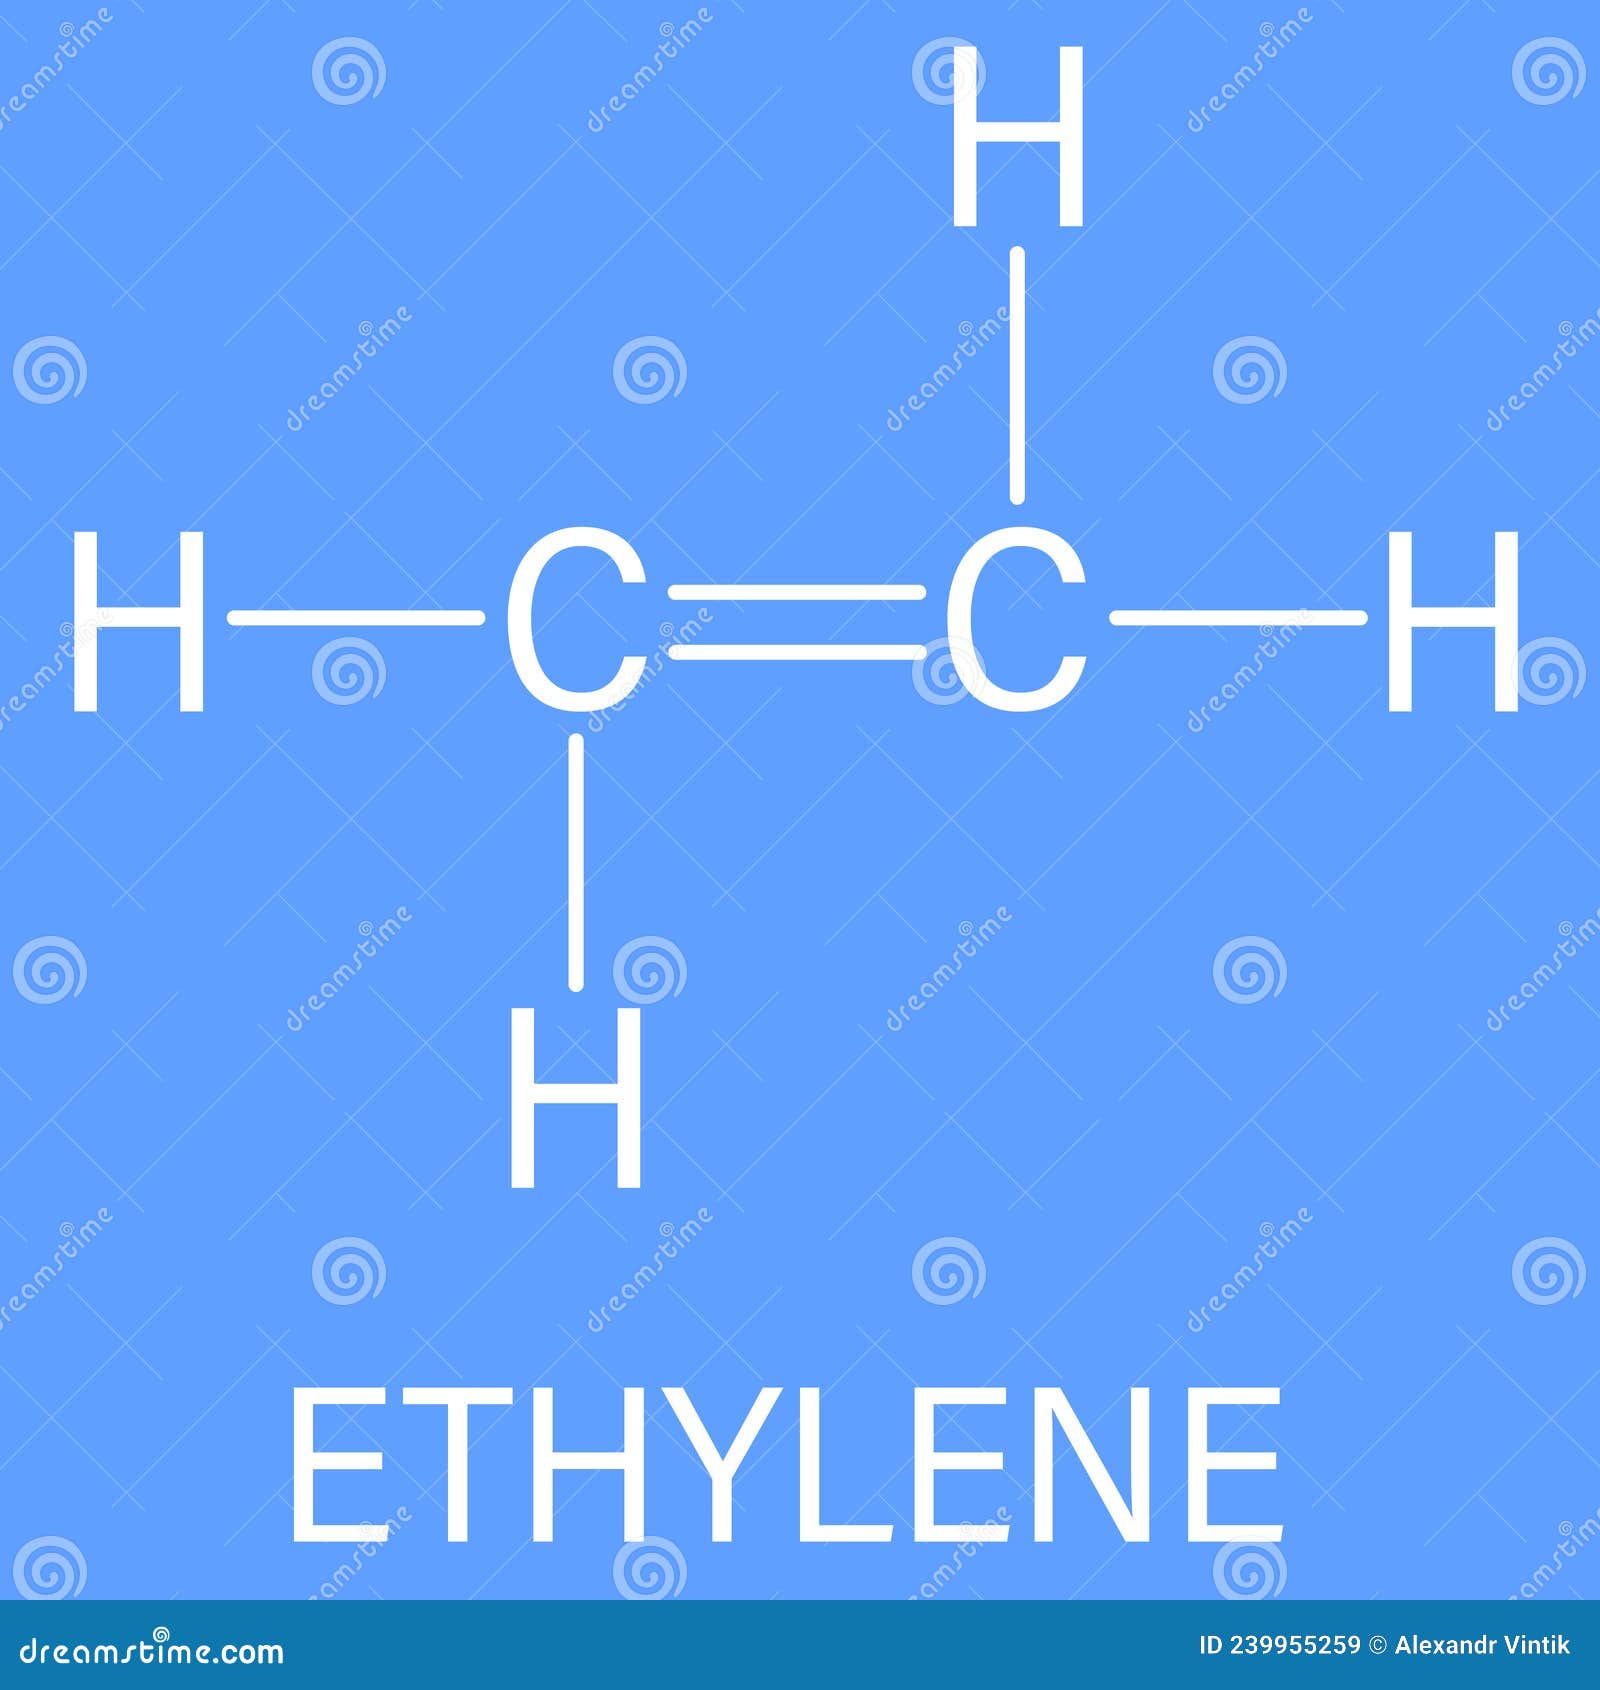 Ethylene Or Ethene Molecule. Used In Production Of Polyethylene But ...